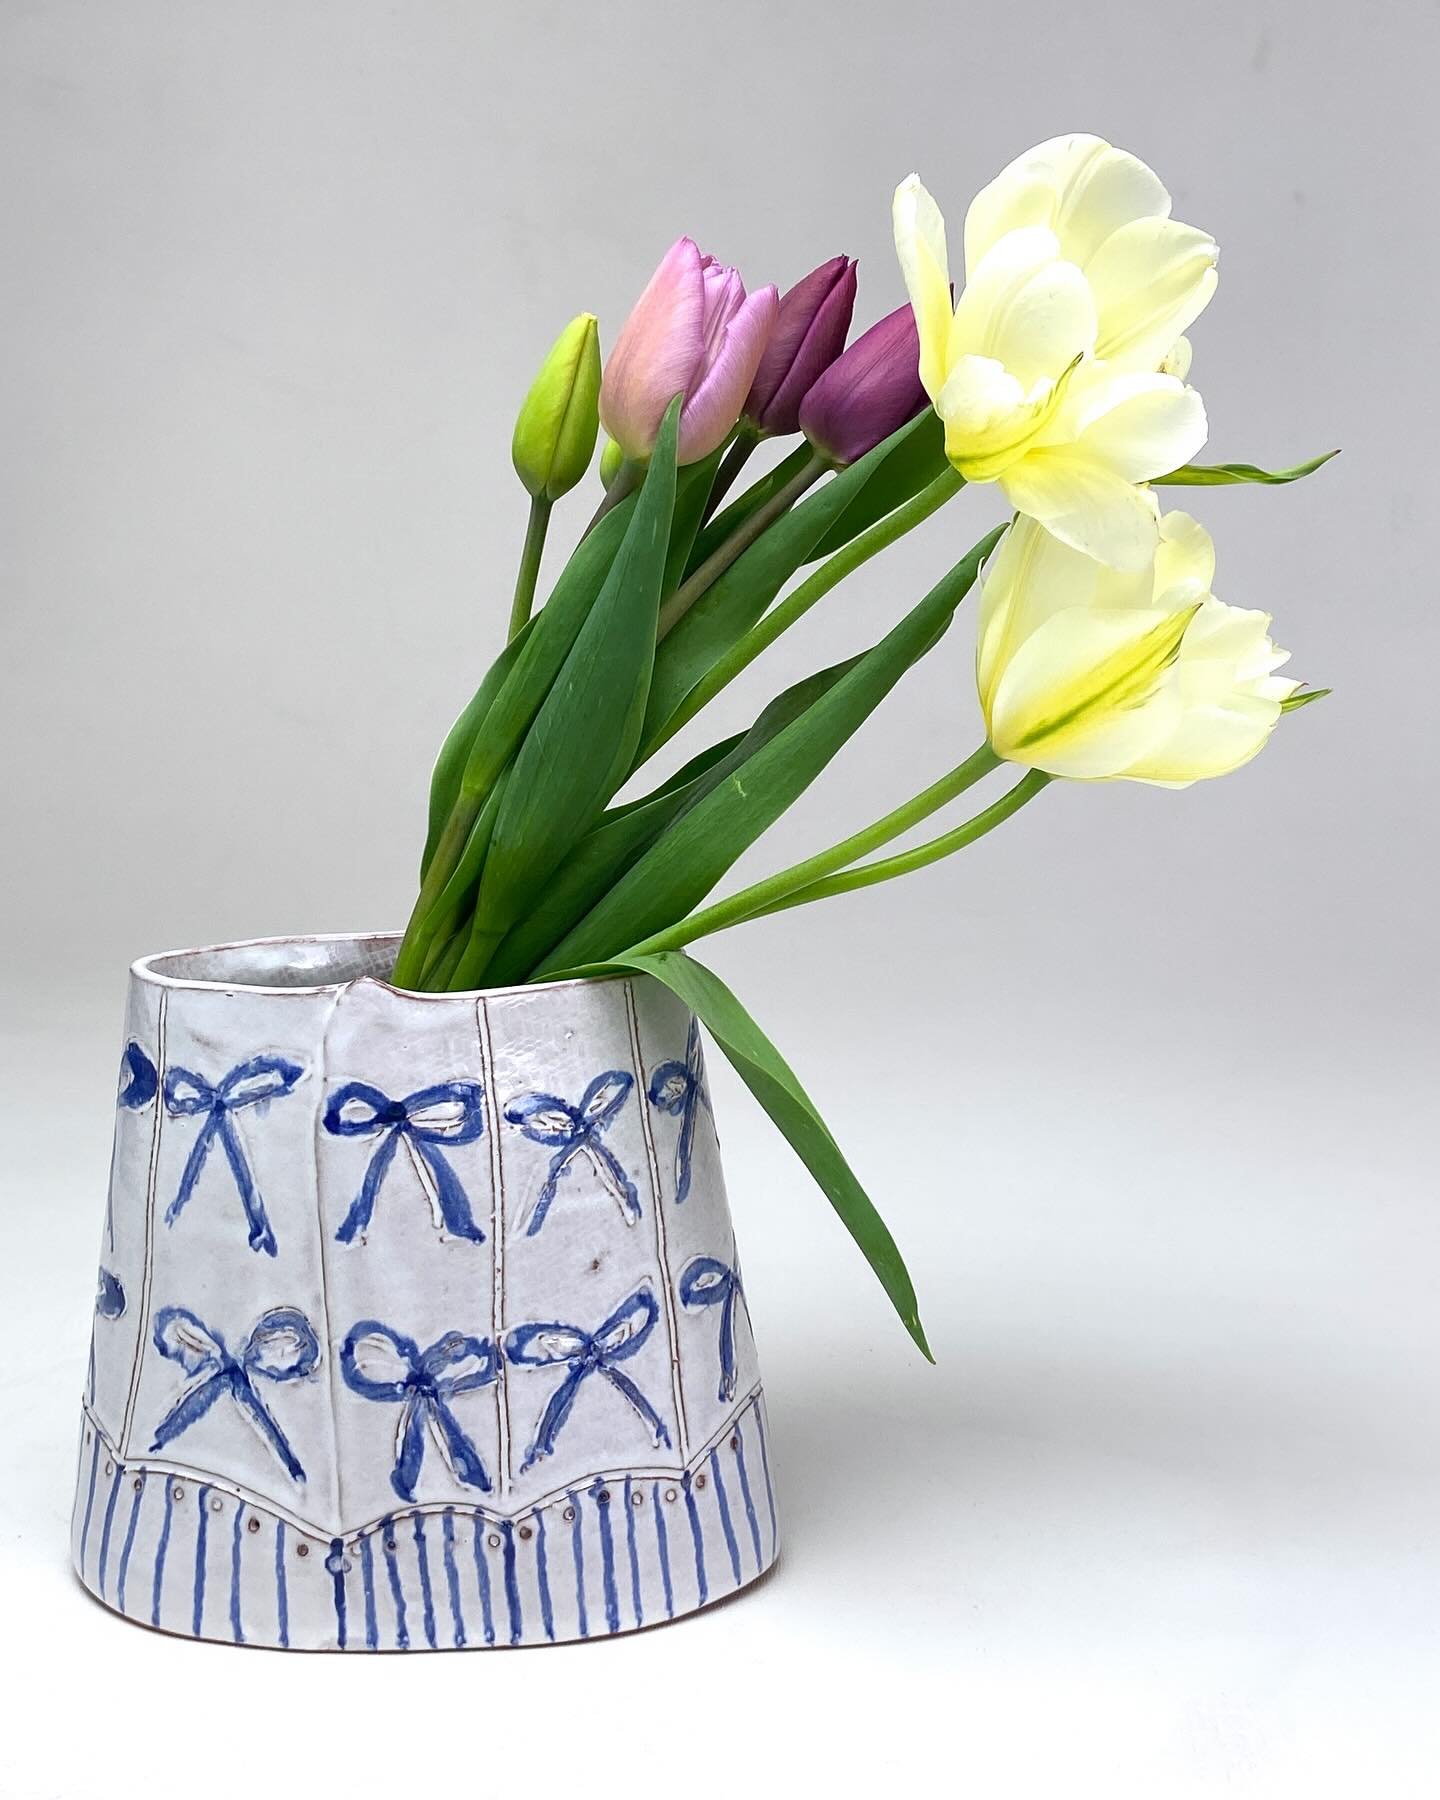 Mothers Day
Earthenware Vase, Maiolica
2024

*link in the bio 

Flowers : @farmhandfarm